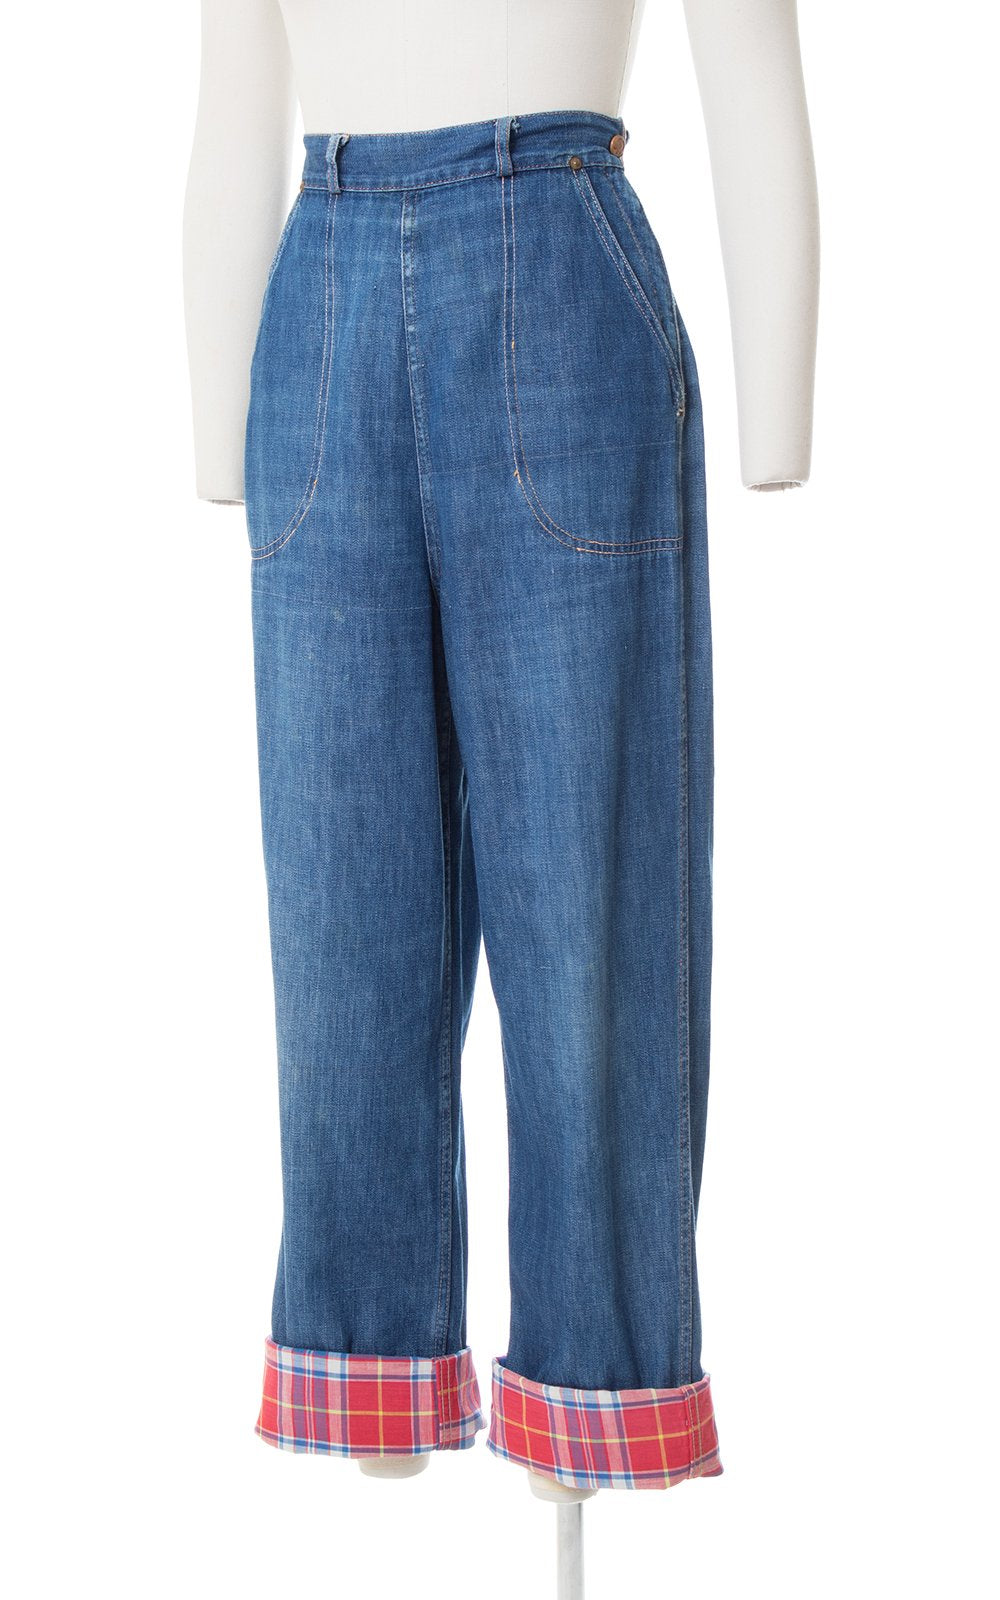 1950s Plaid Cuff Medium-Wash Denim Jeans